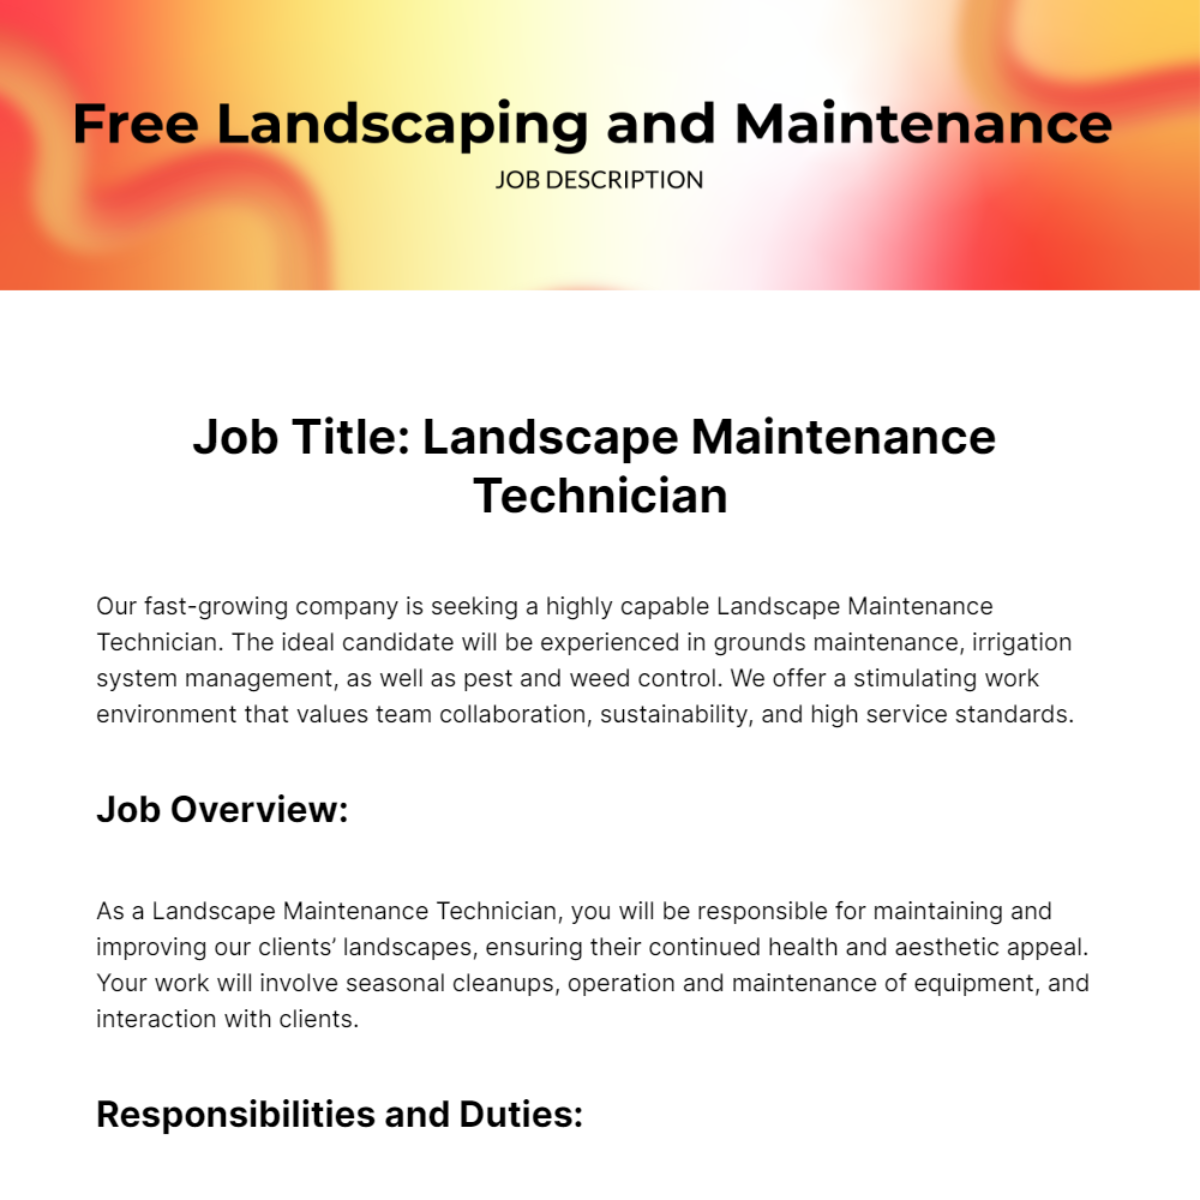 Landscaping and Maintenance Job Description Template